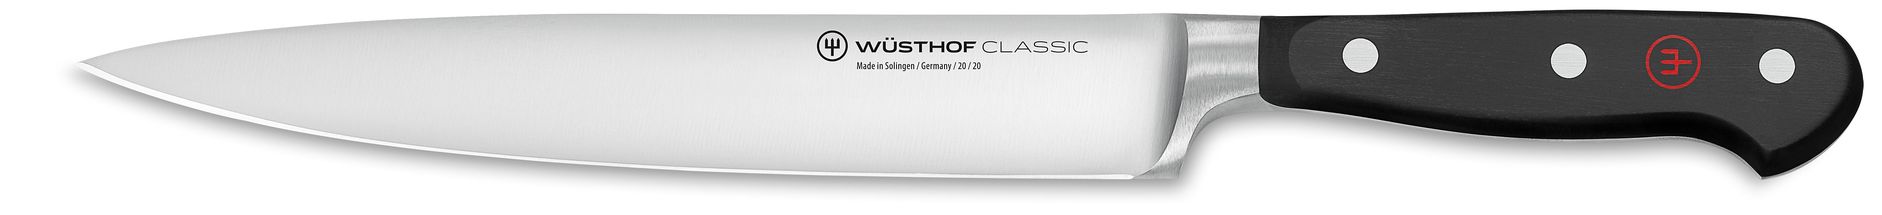 Wusthof Meat Knife Classic 20 cm